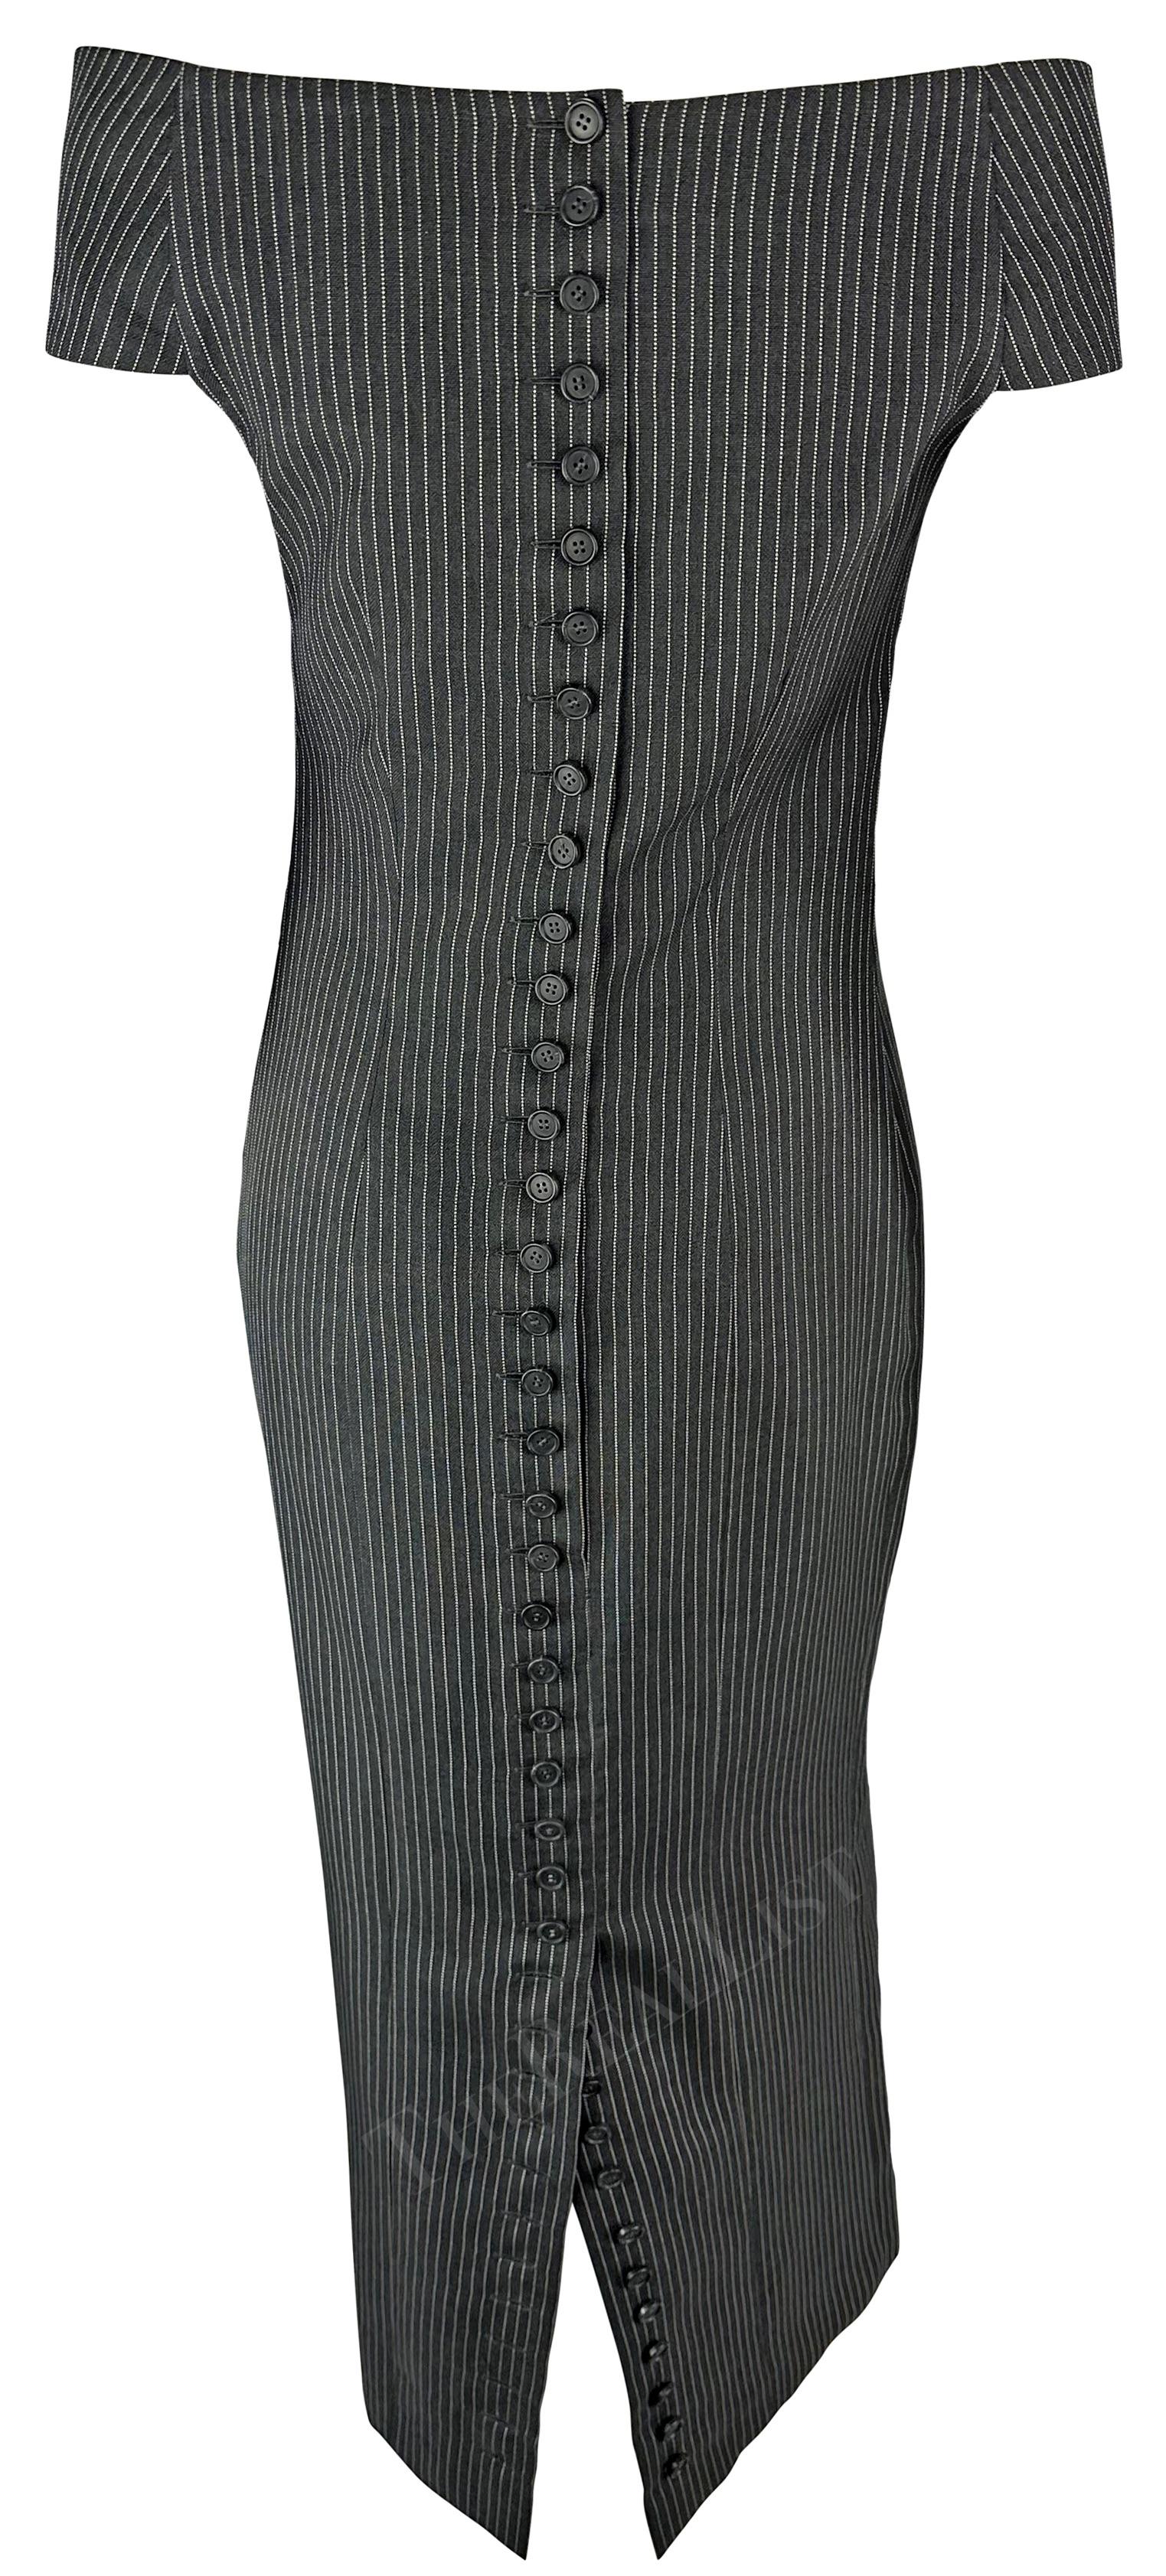 S/S 1996 Gianfranco Ferré Runway Grey Charcoal Pinstripe Off-Shoulder Dress For Sale 1